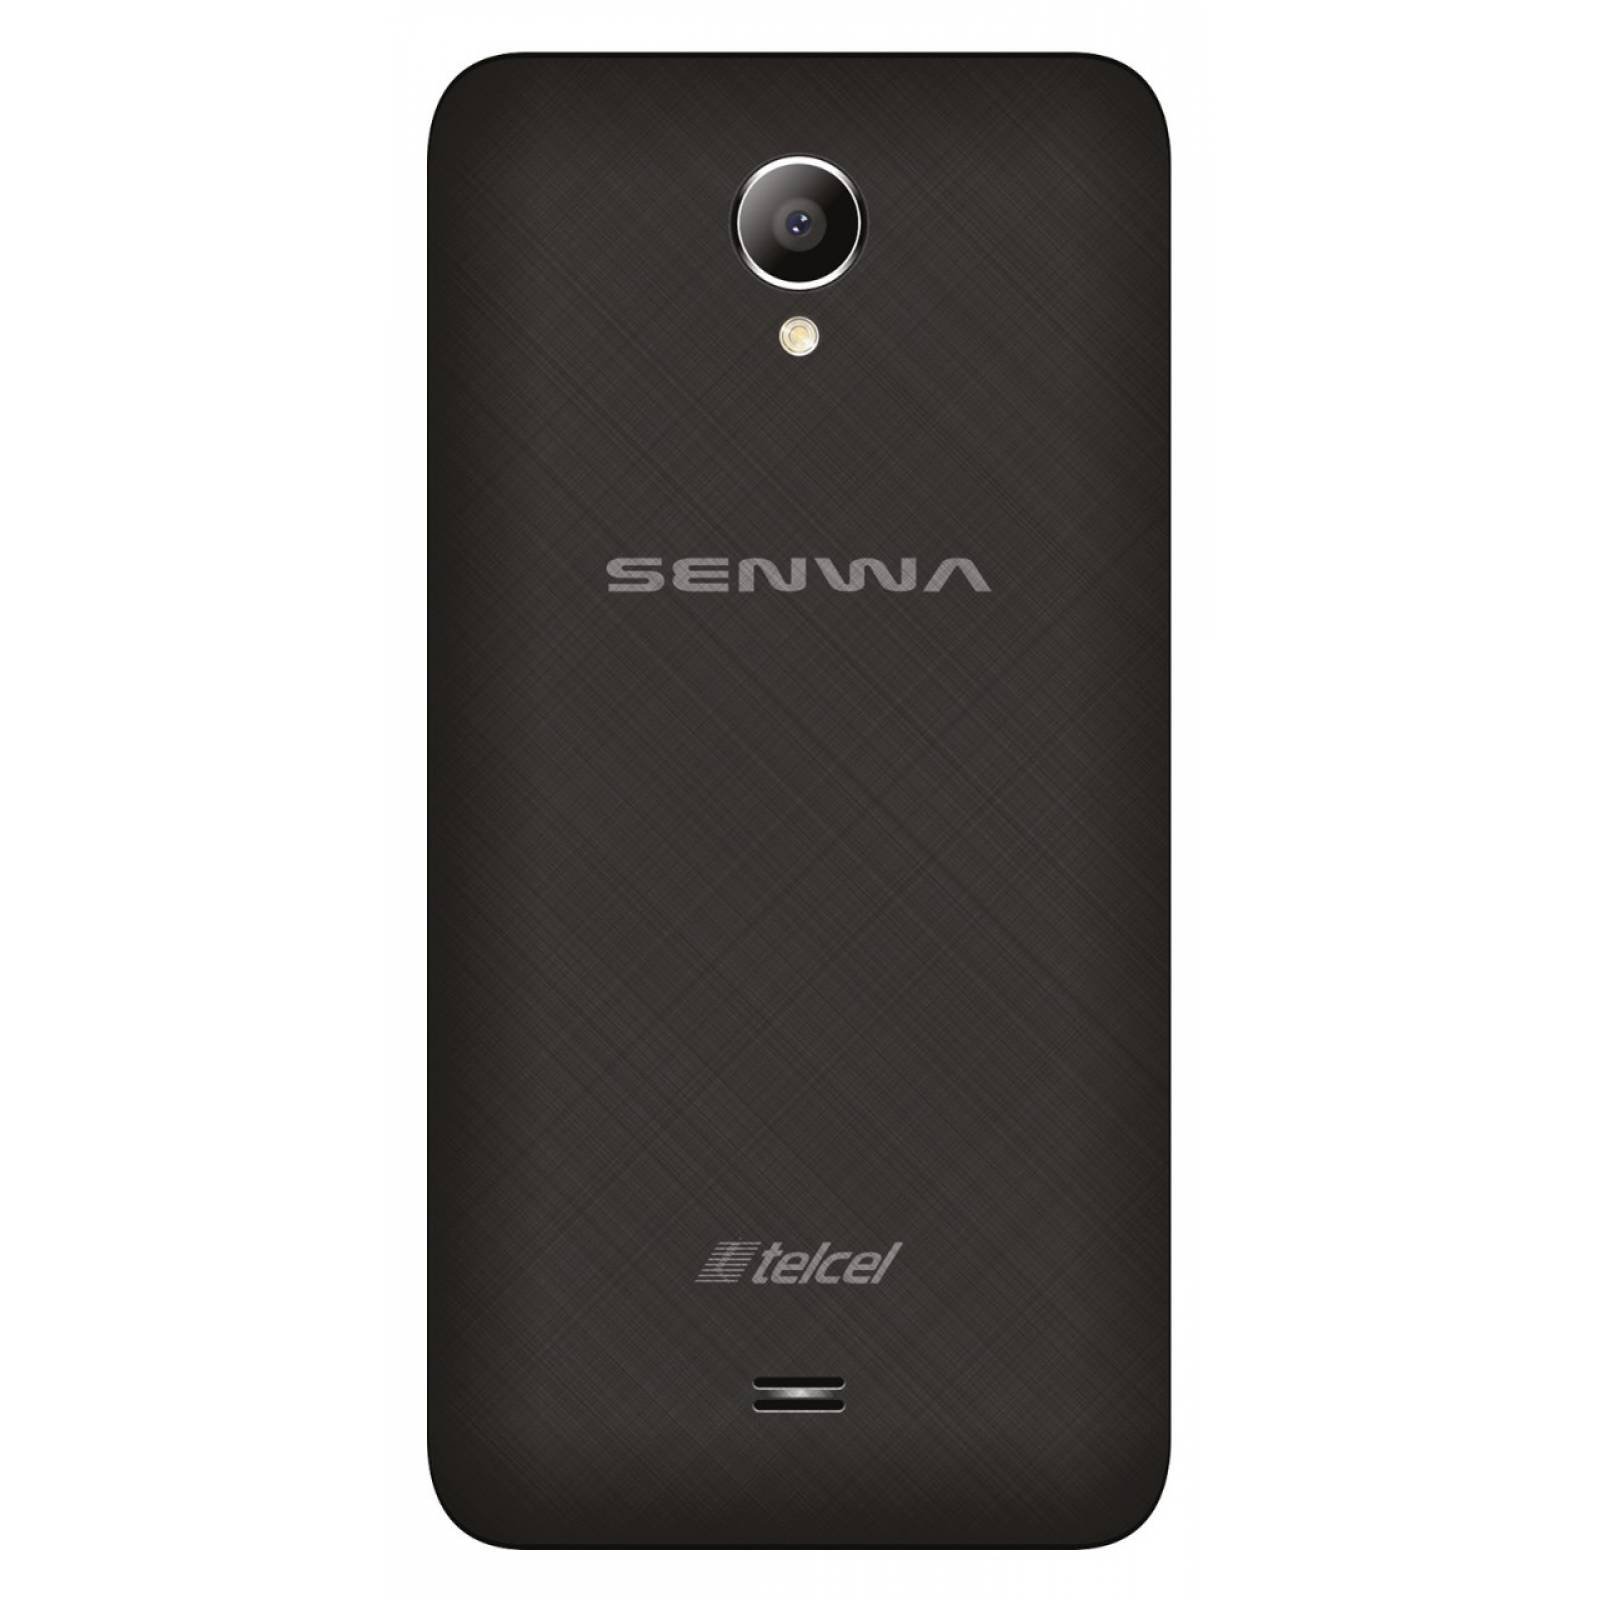 Celular SENWA LTE LS50 PEGASUS Color NEGRO Telcel más Power Bank de regalo